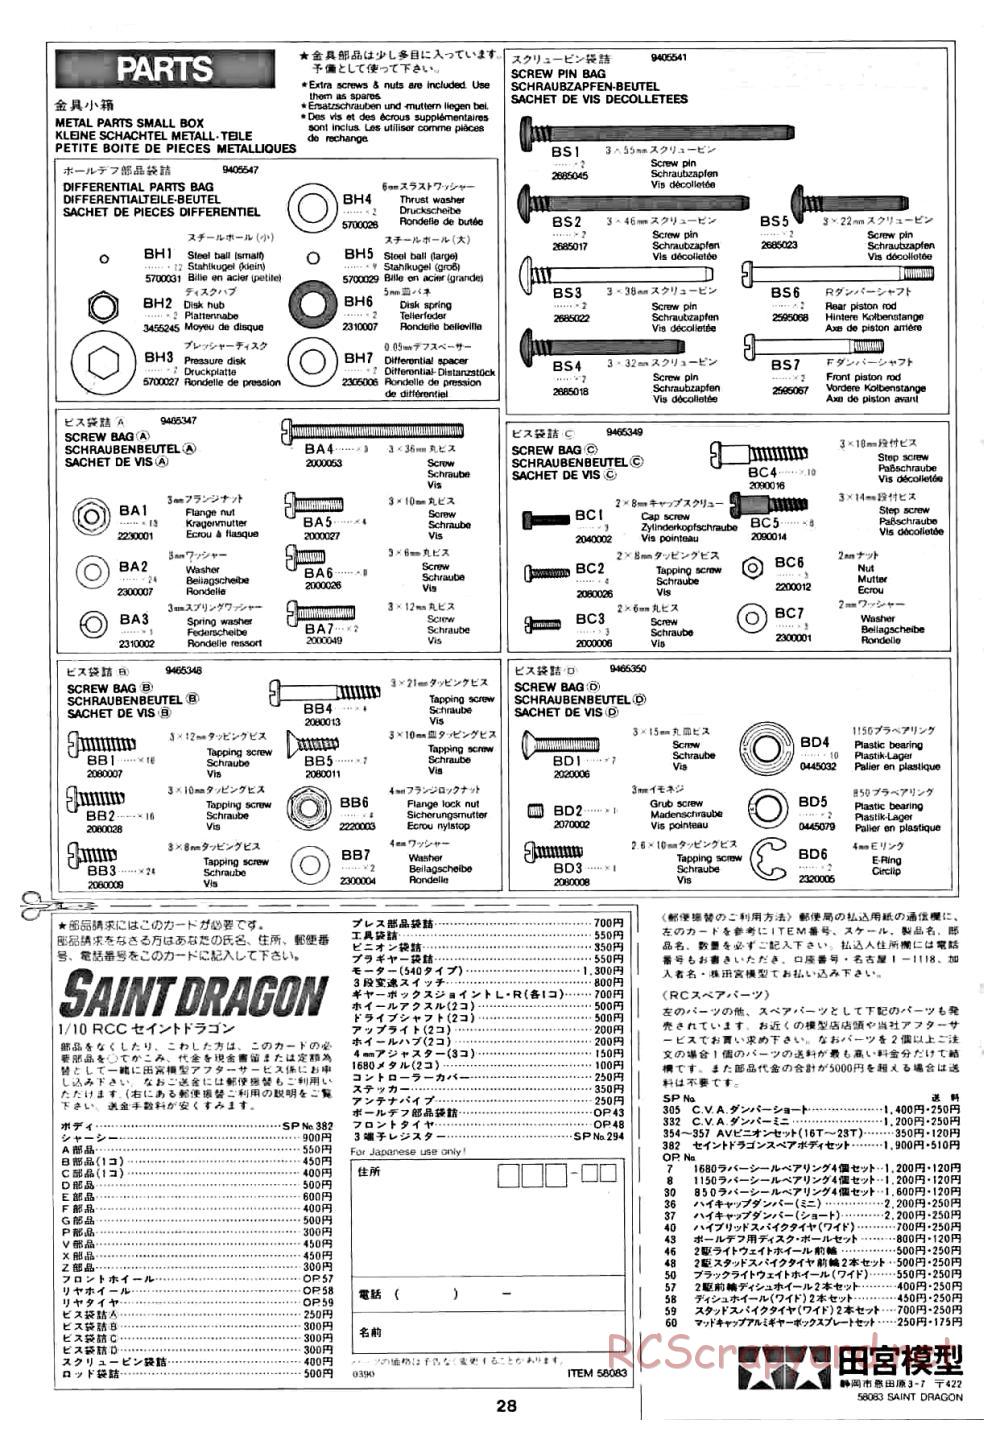 Tamiya - Saint Dragon - 58083 - Manual - Page 28